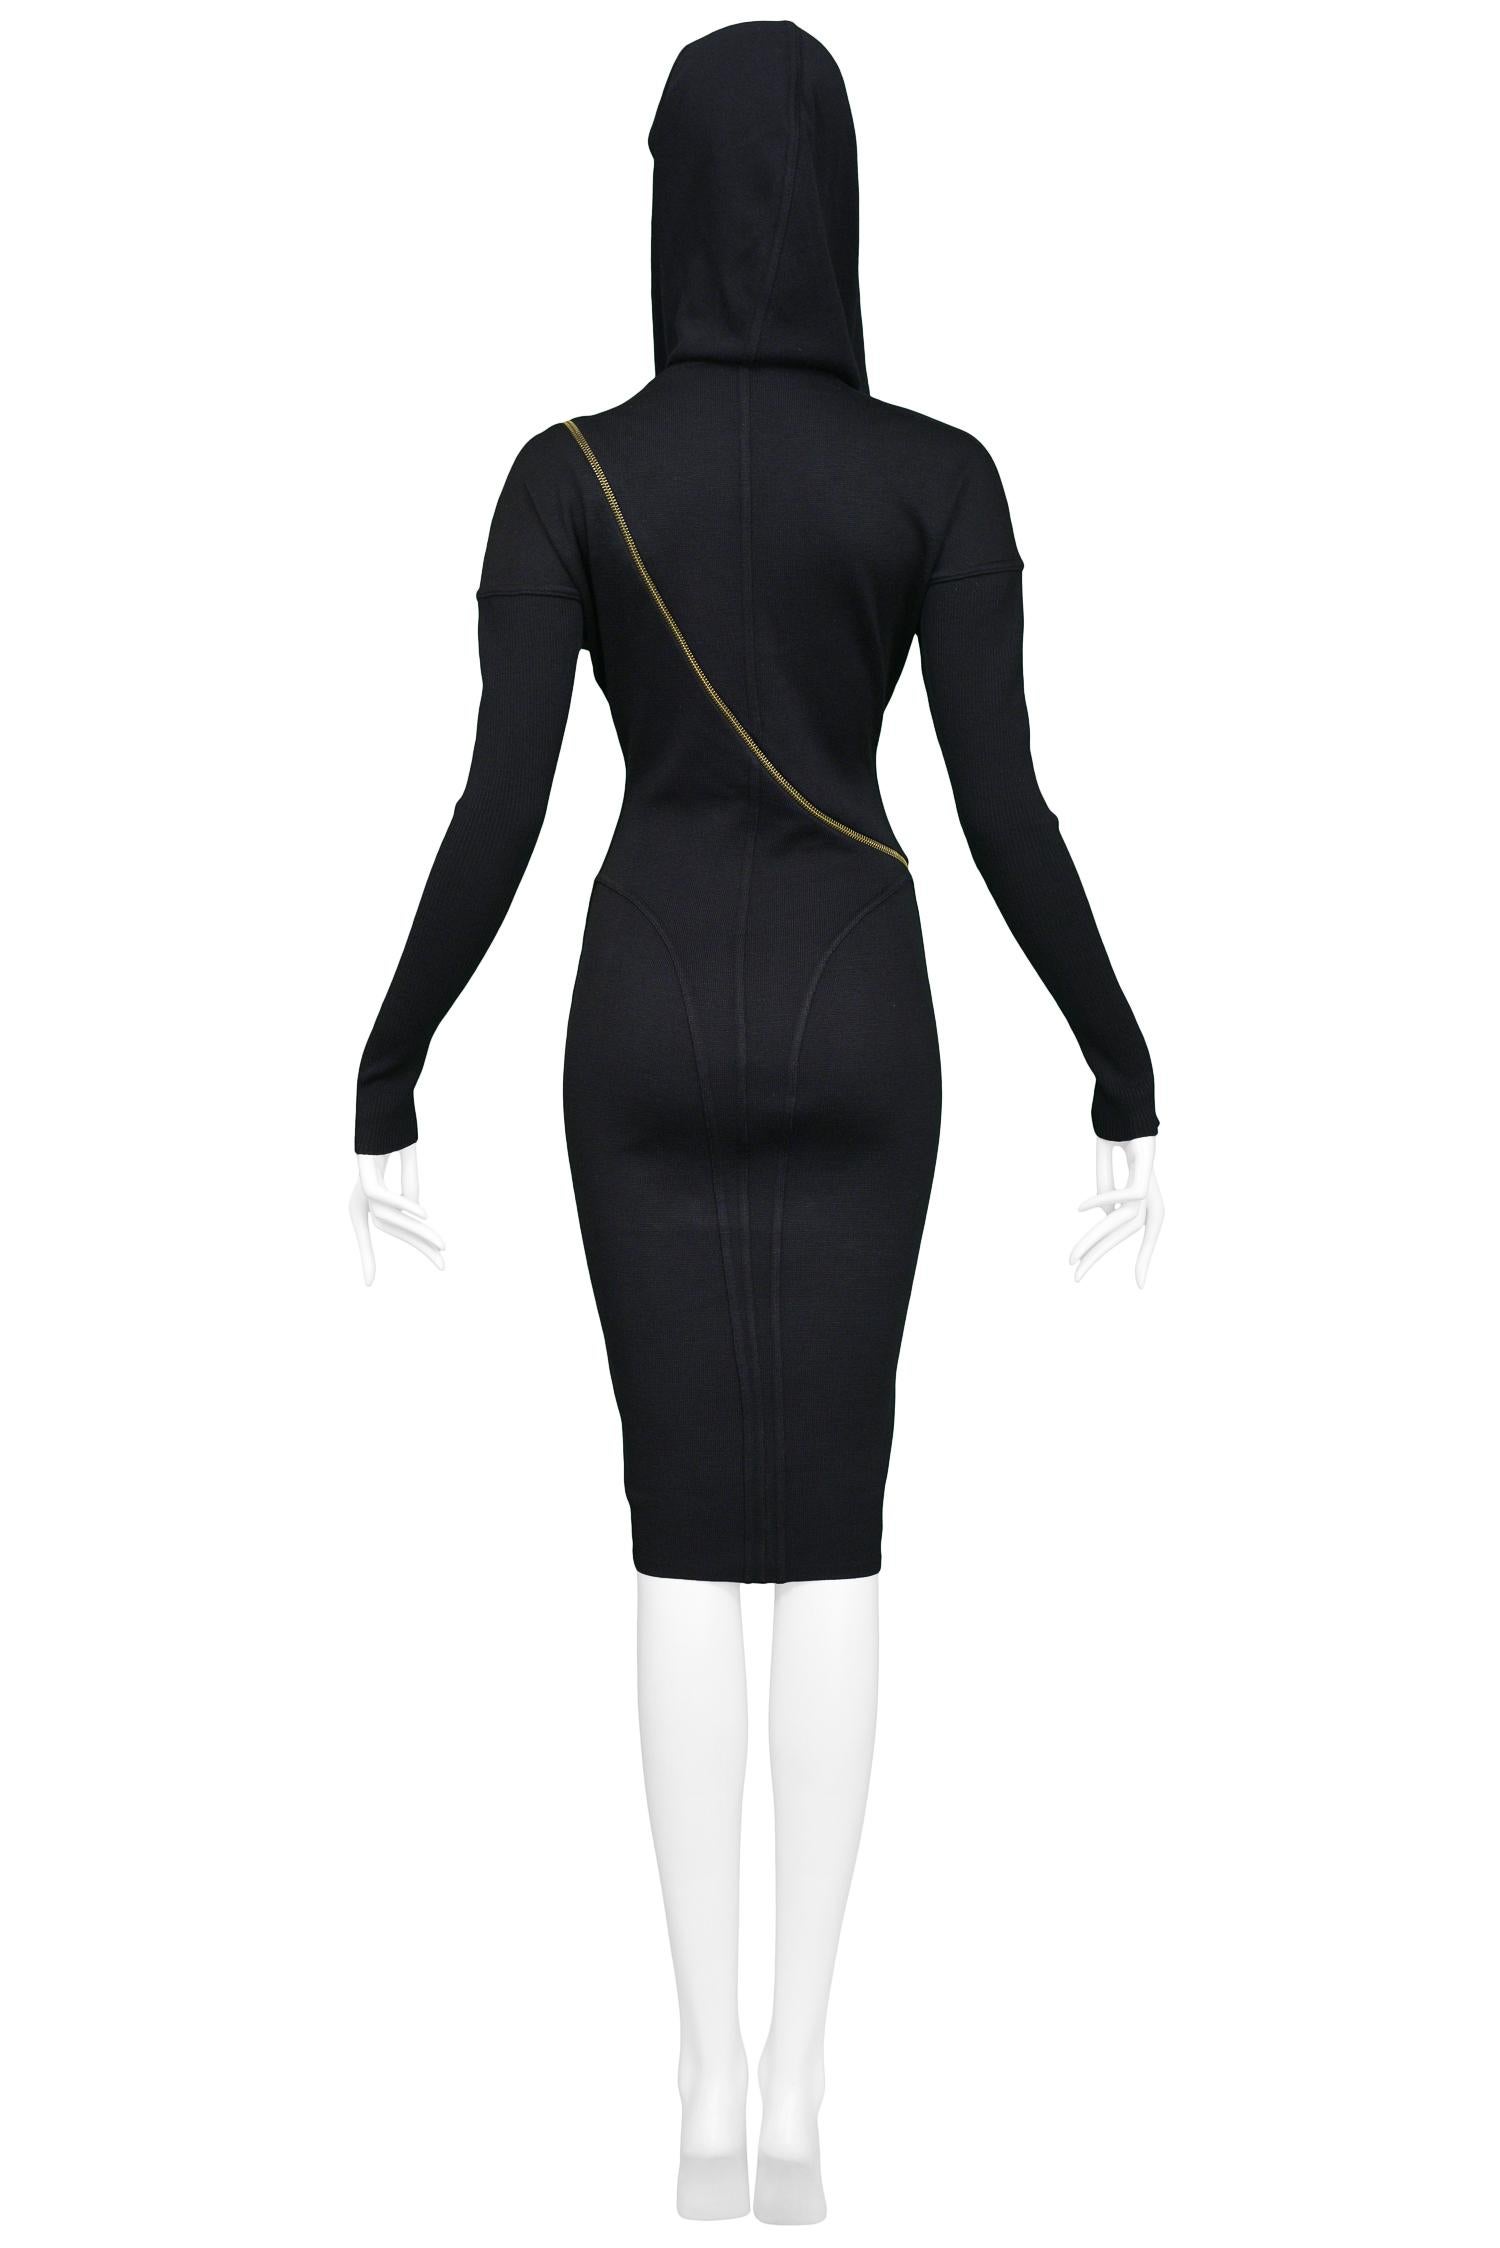 Vintage Alaia Iconic Black Hooded Zipper Dress 1986 1